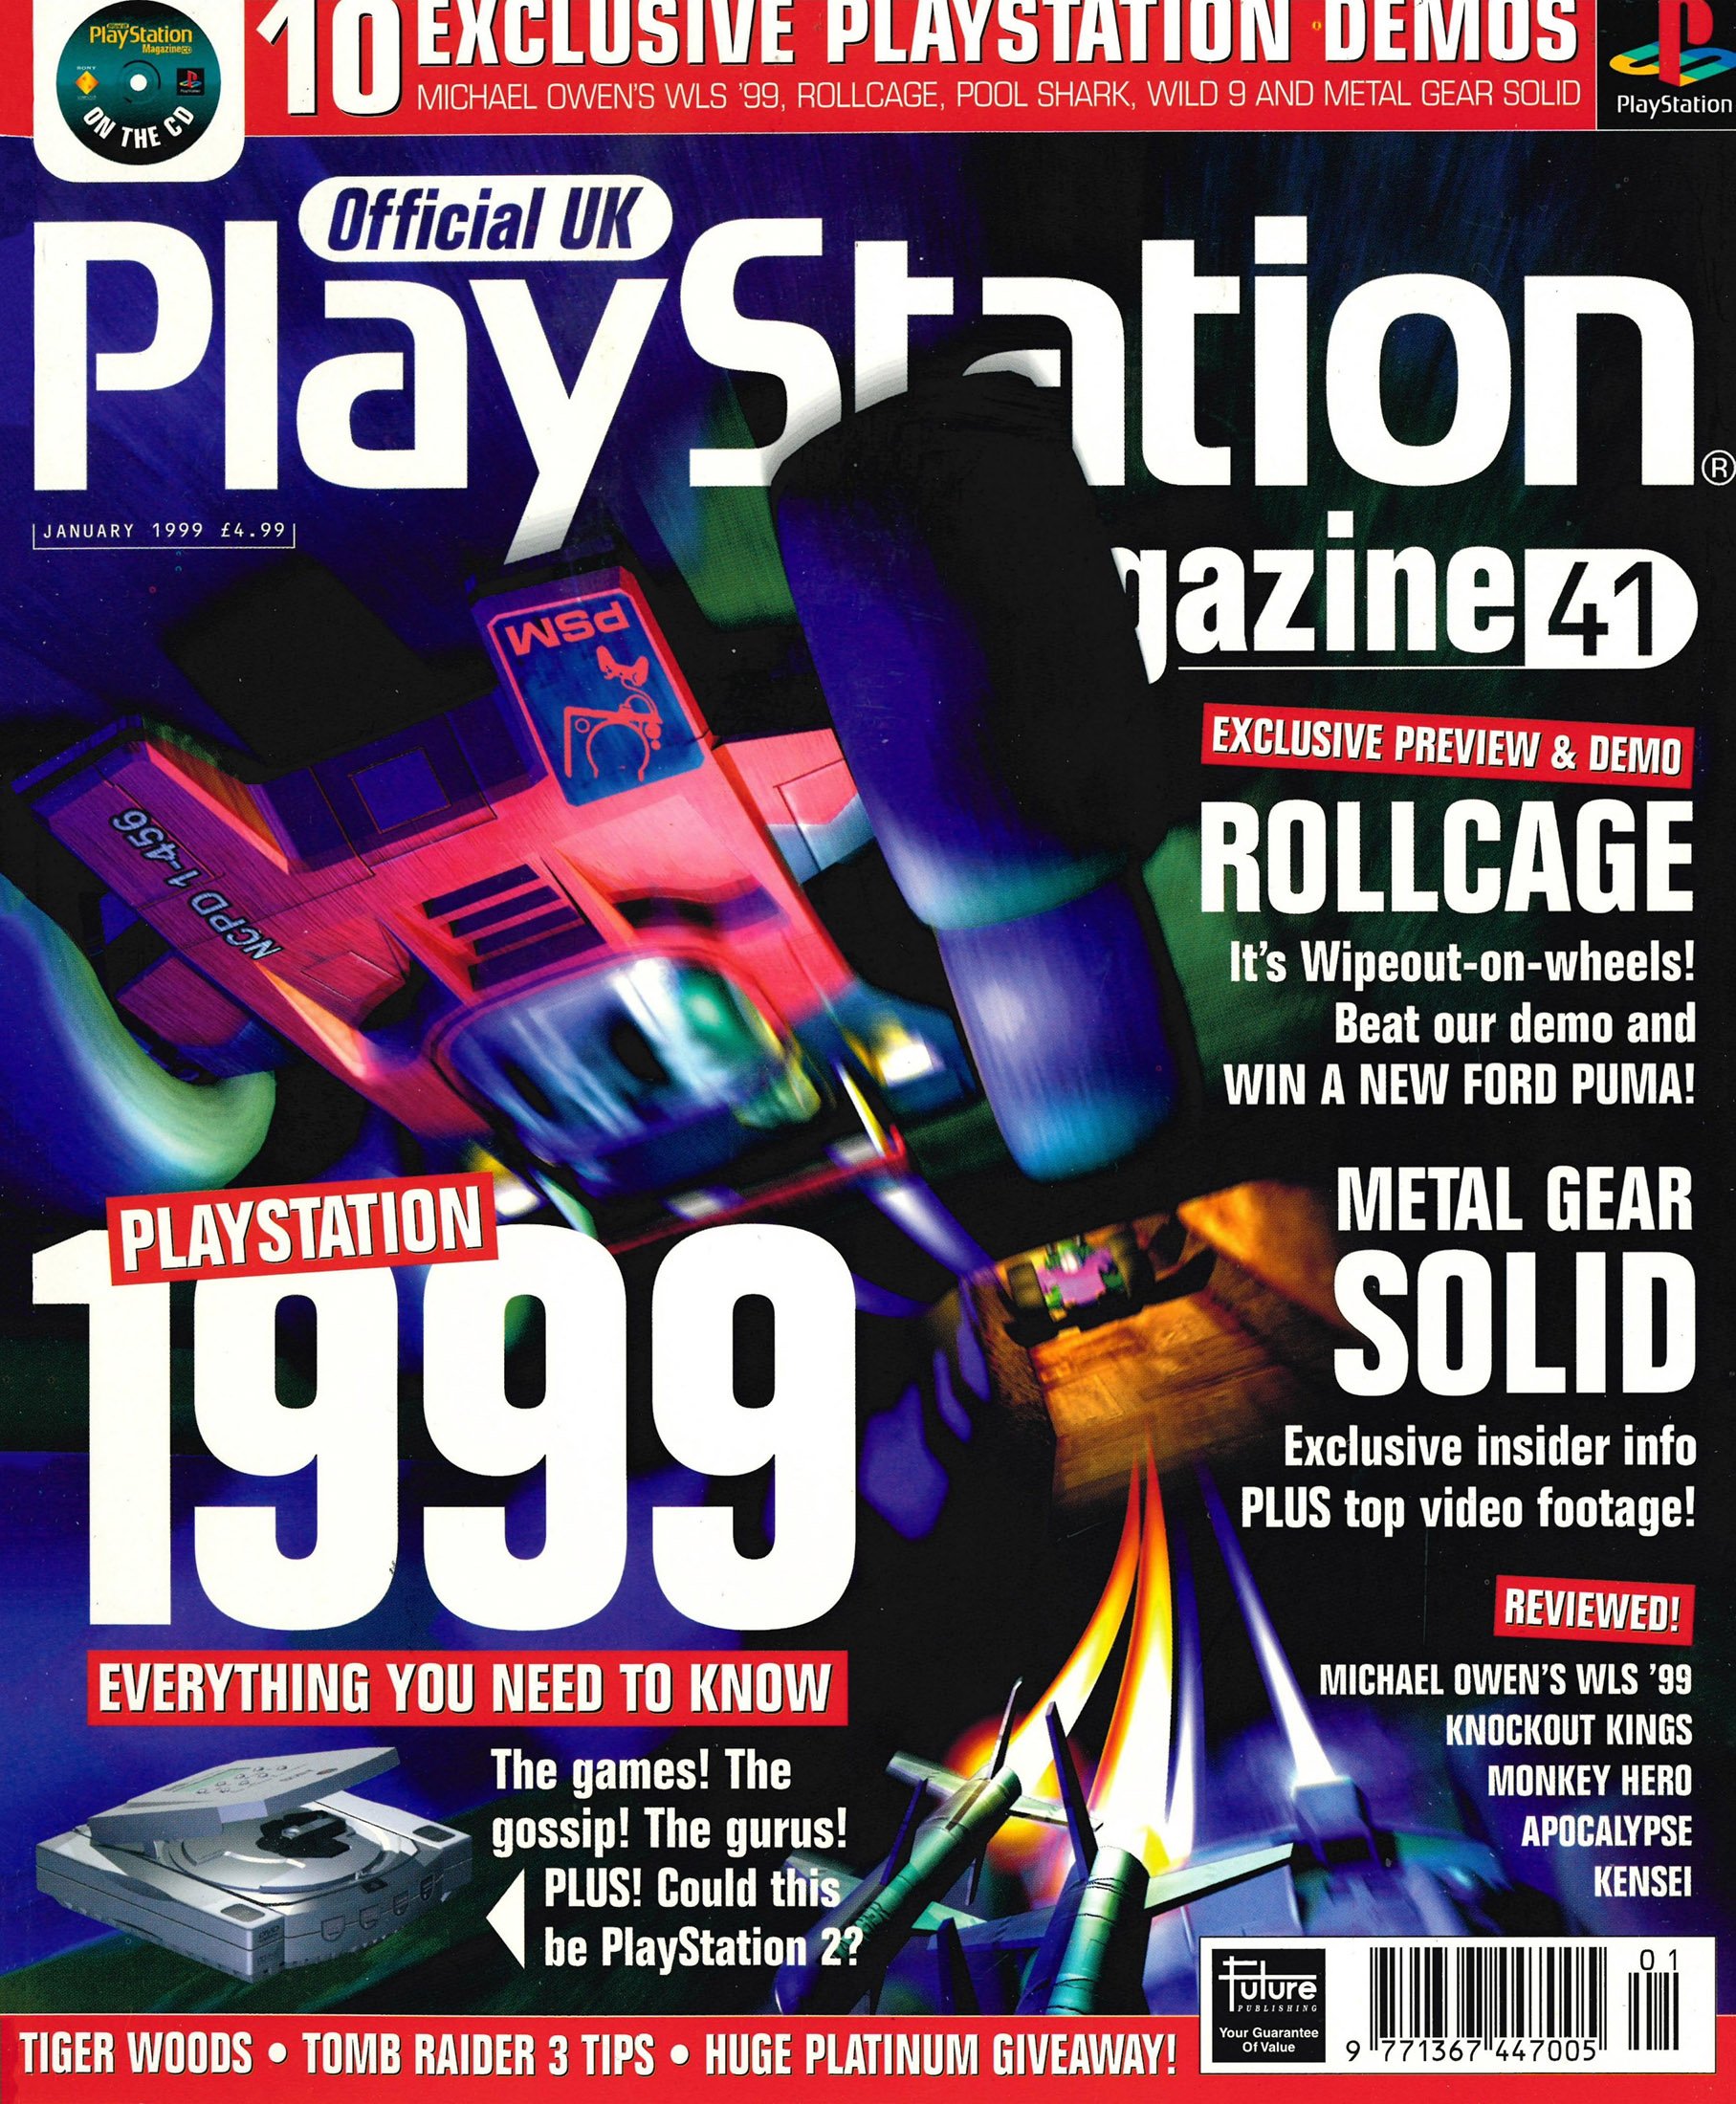 Official PlayStation Magazine - UK Edition January 2015 (Digital